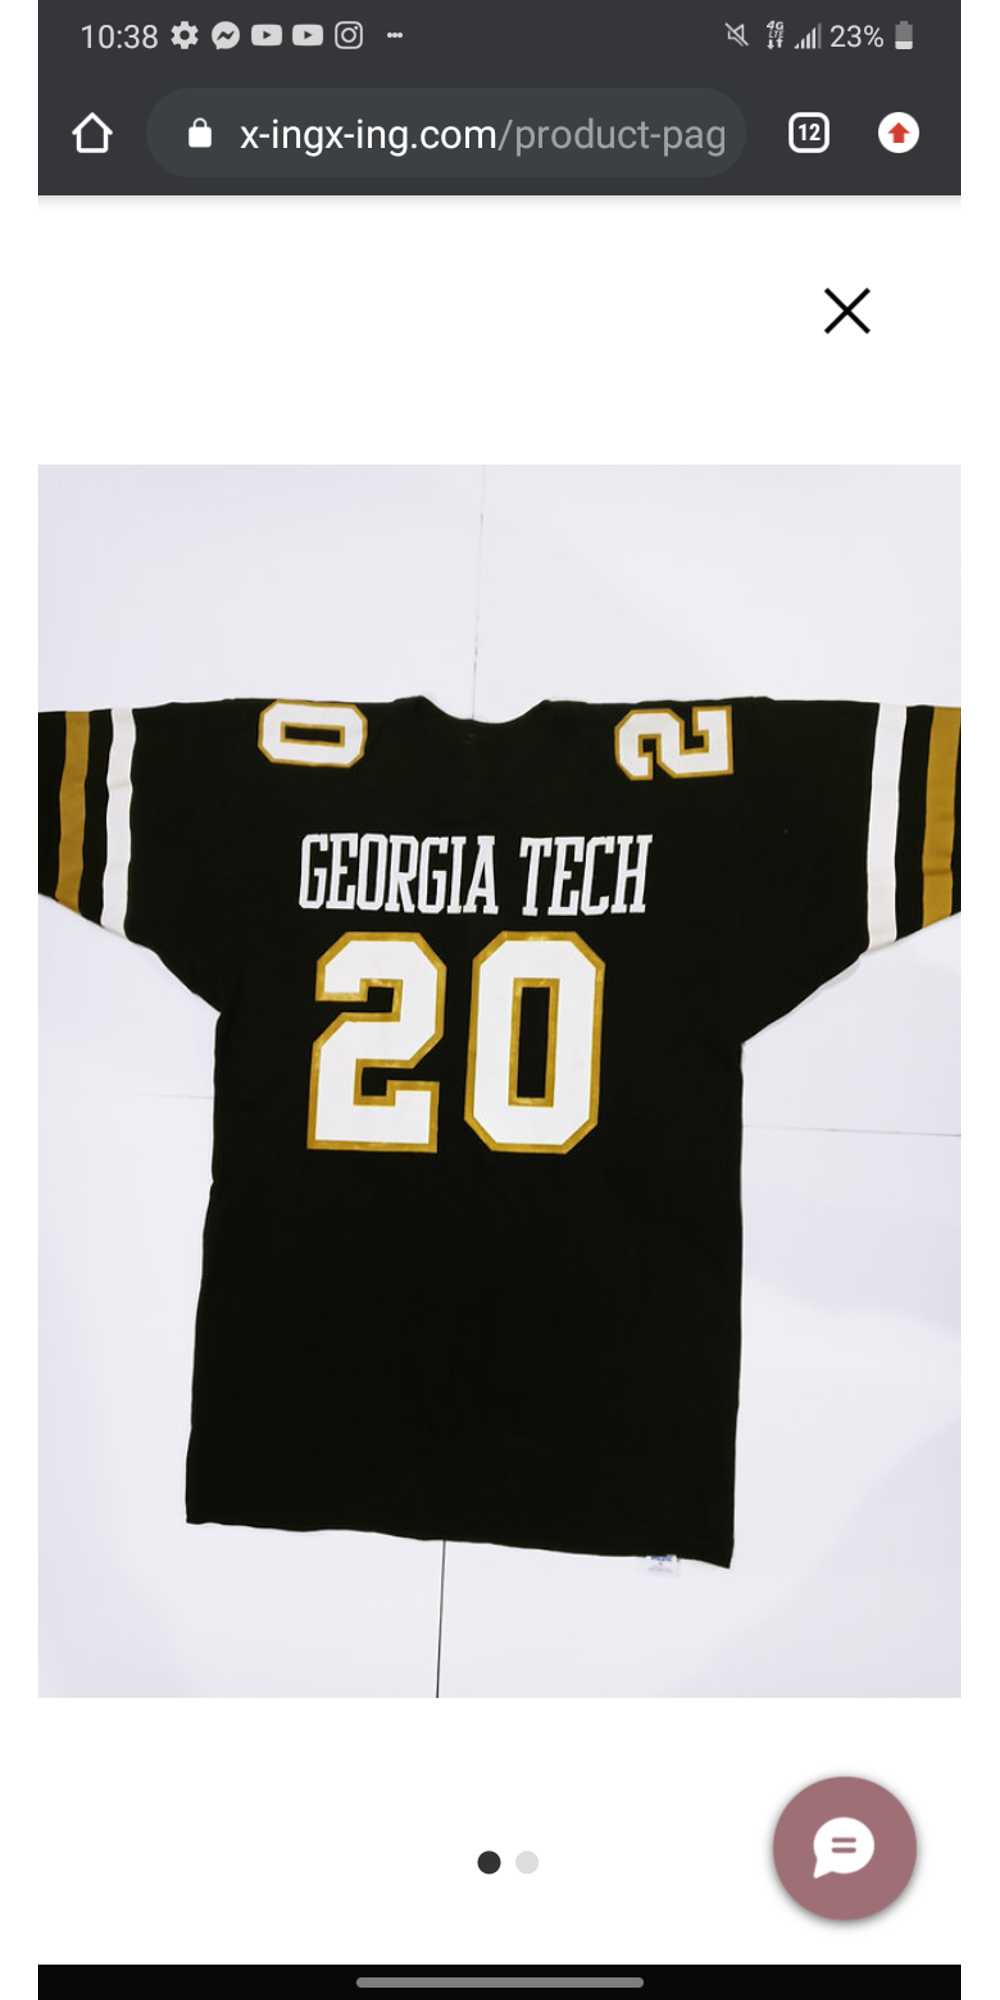 Georgia Tech old school cloth jersey - image 2